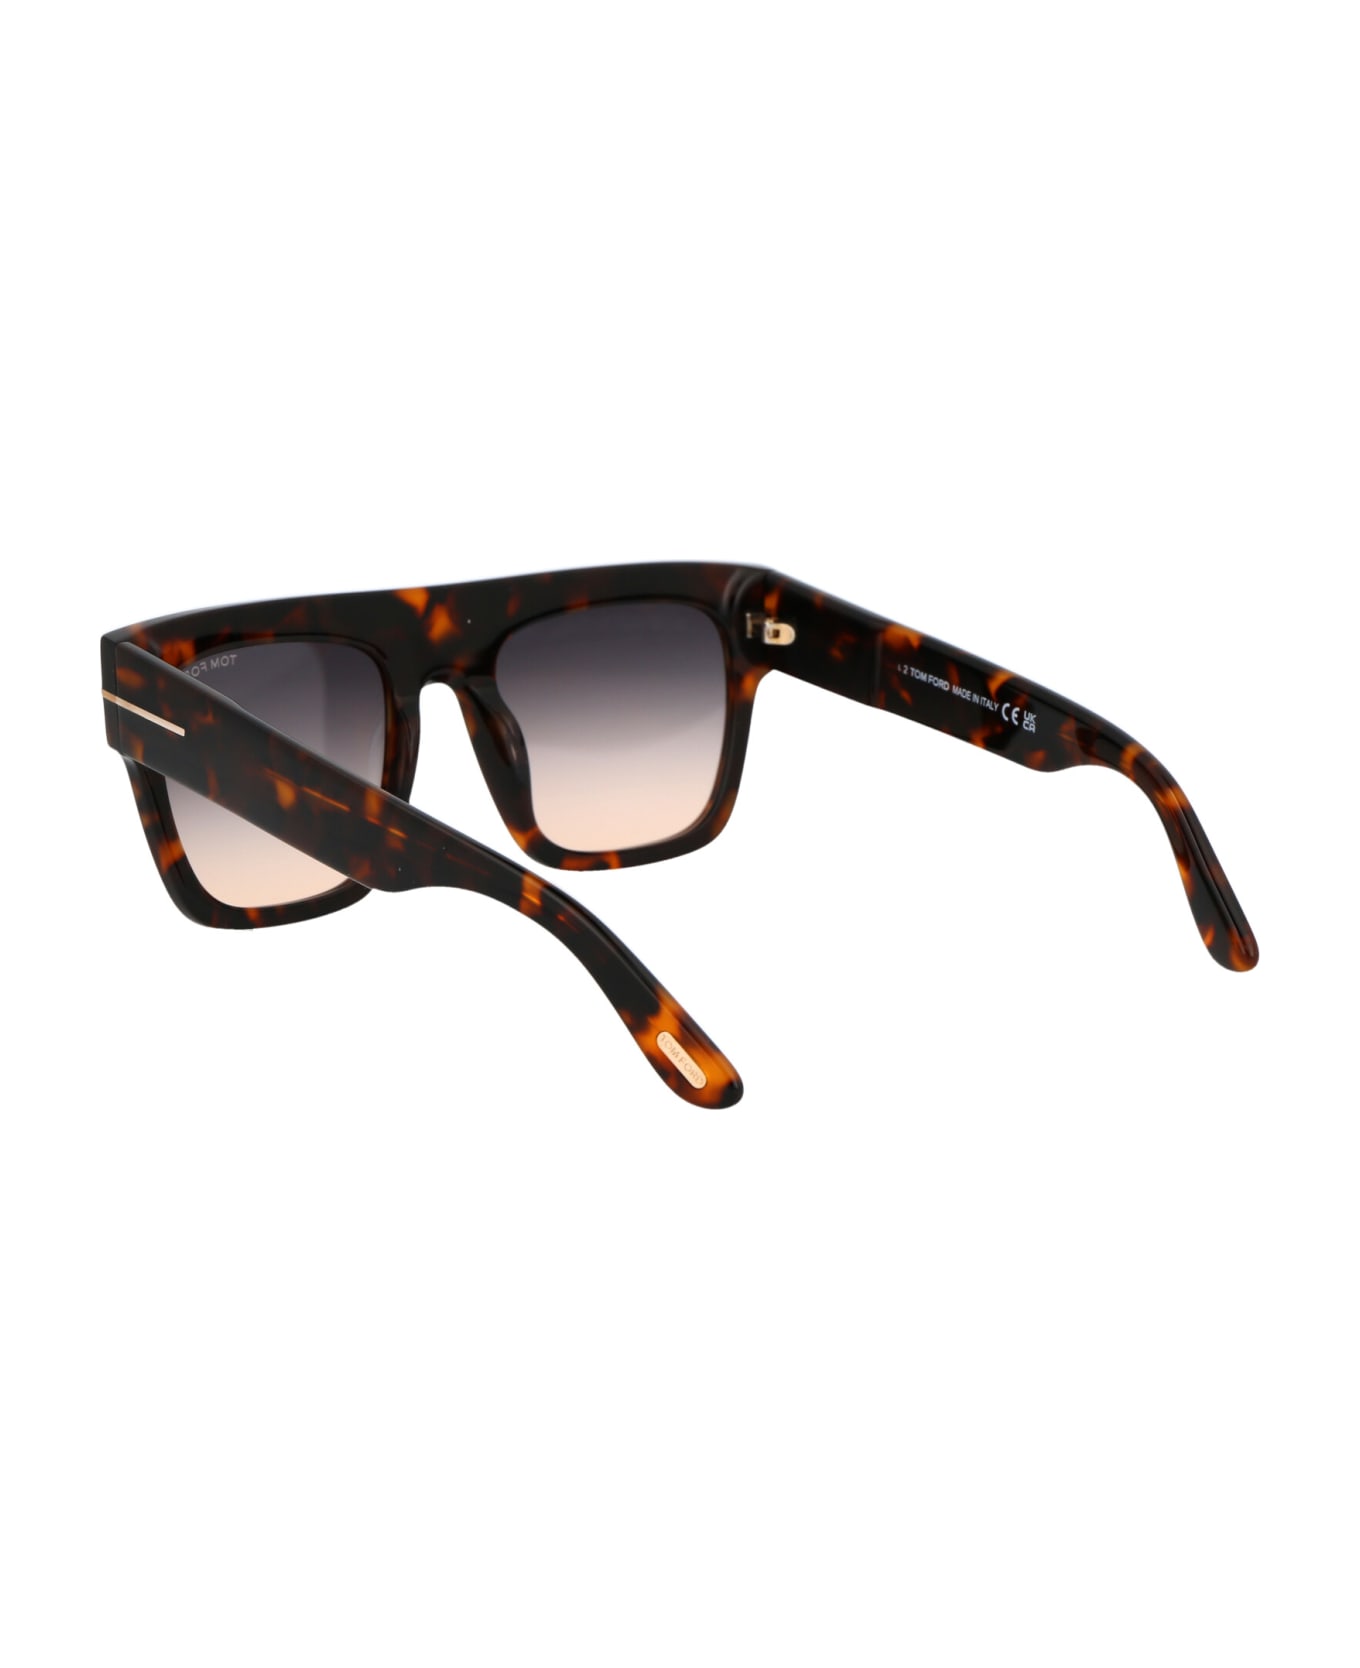 Tom Ford Eyewear Renee Sunglasses - 52B Avana Scura  / Fumo Grad